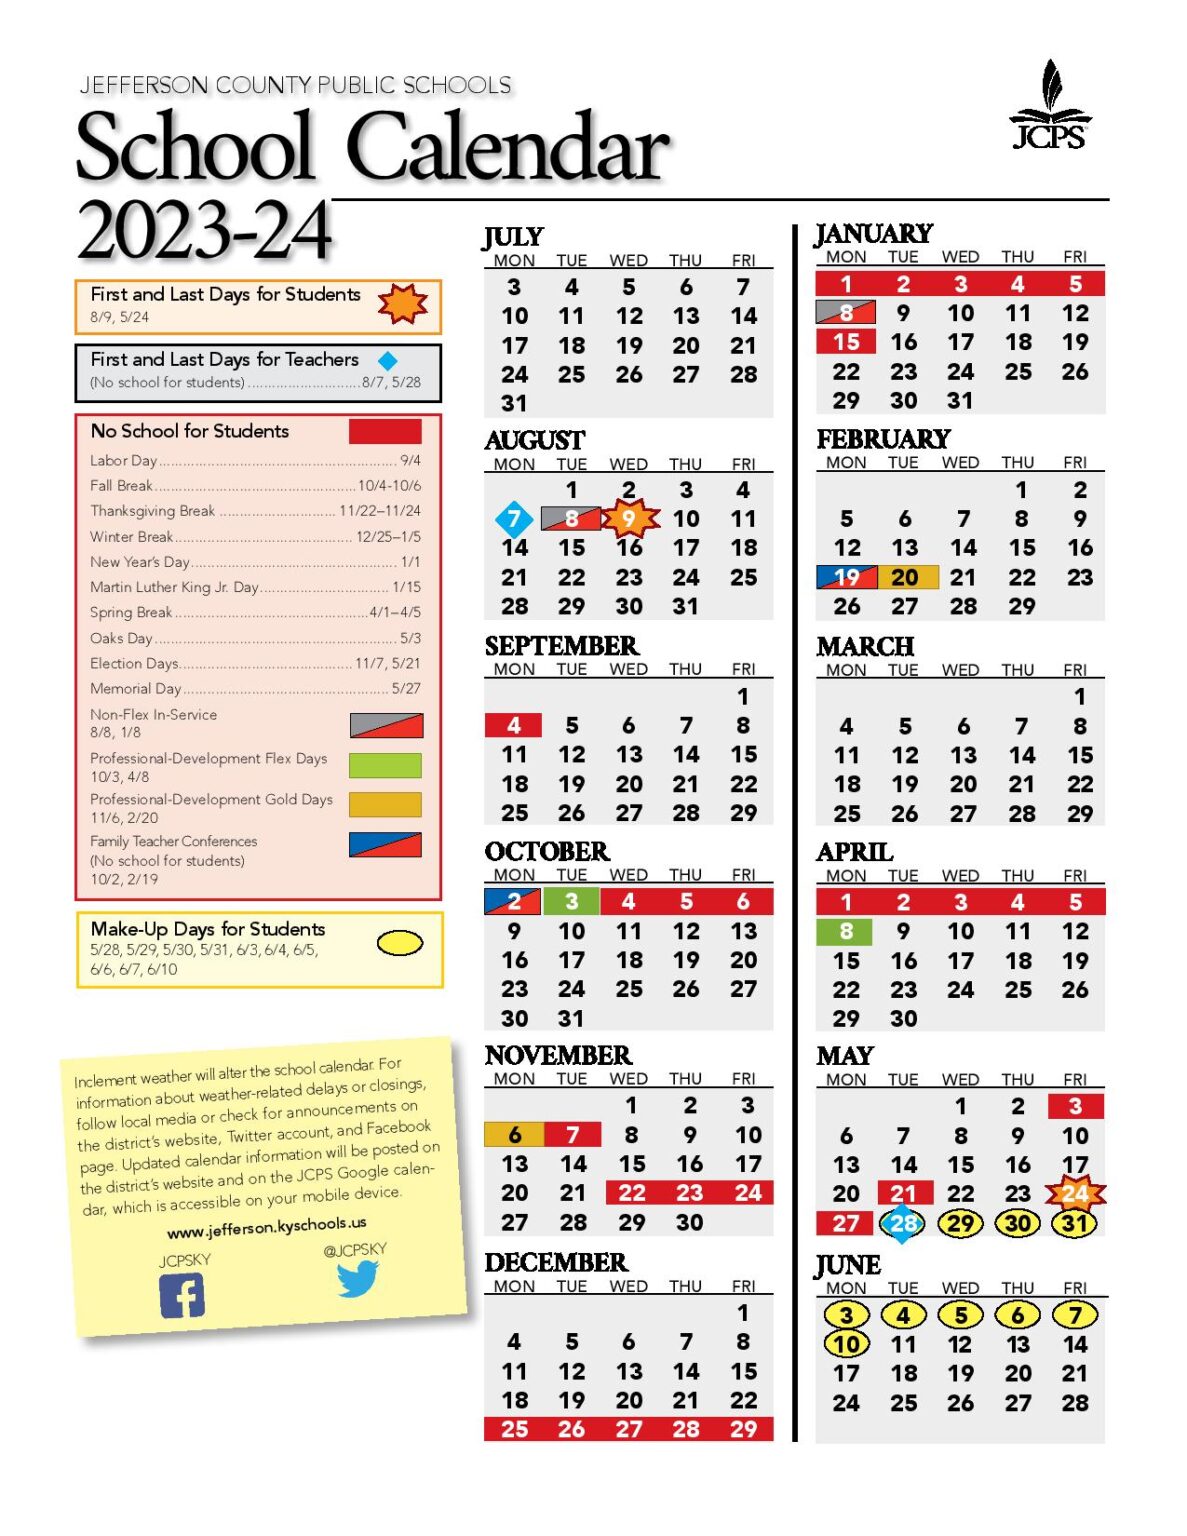 Jefferson County Public Schools Calendar Holidays 2023